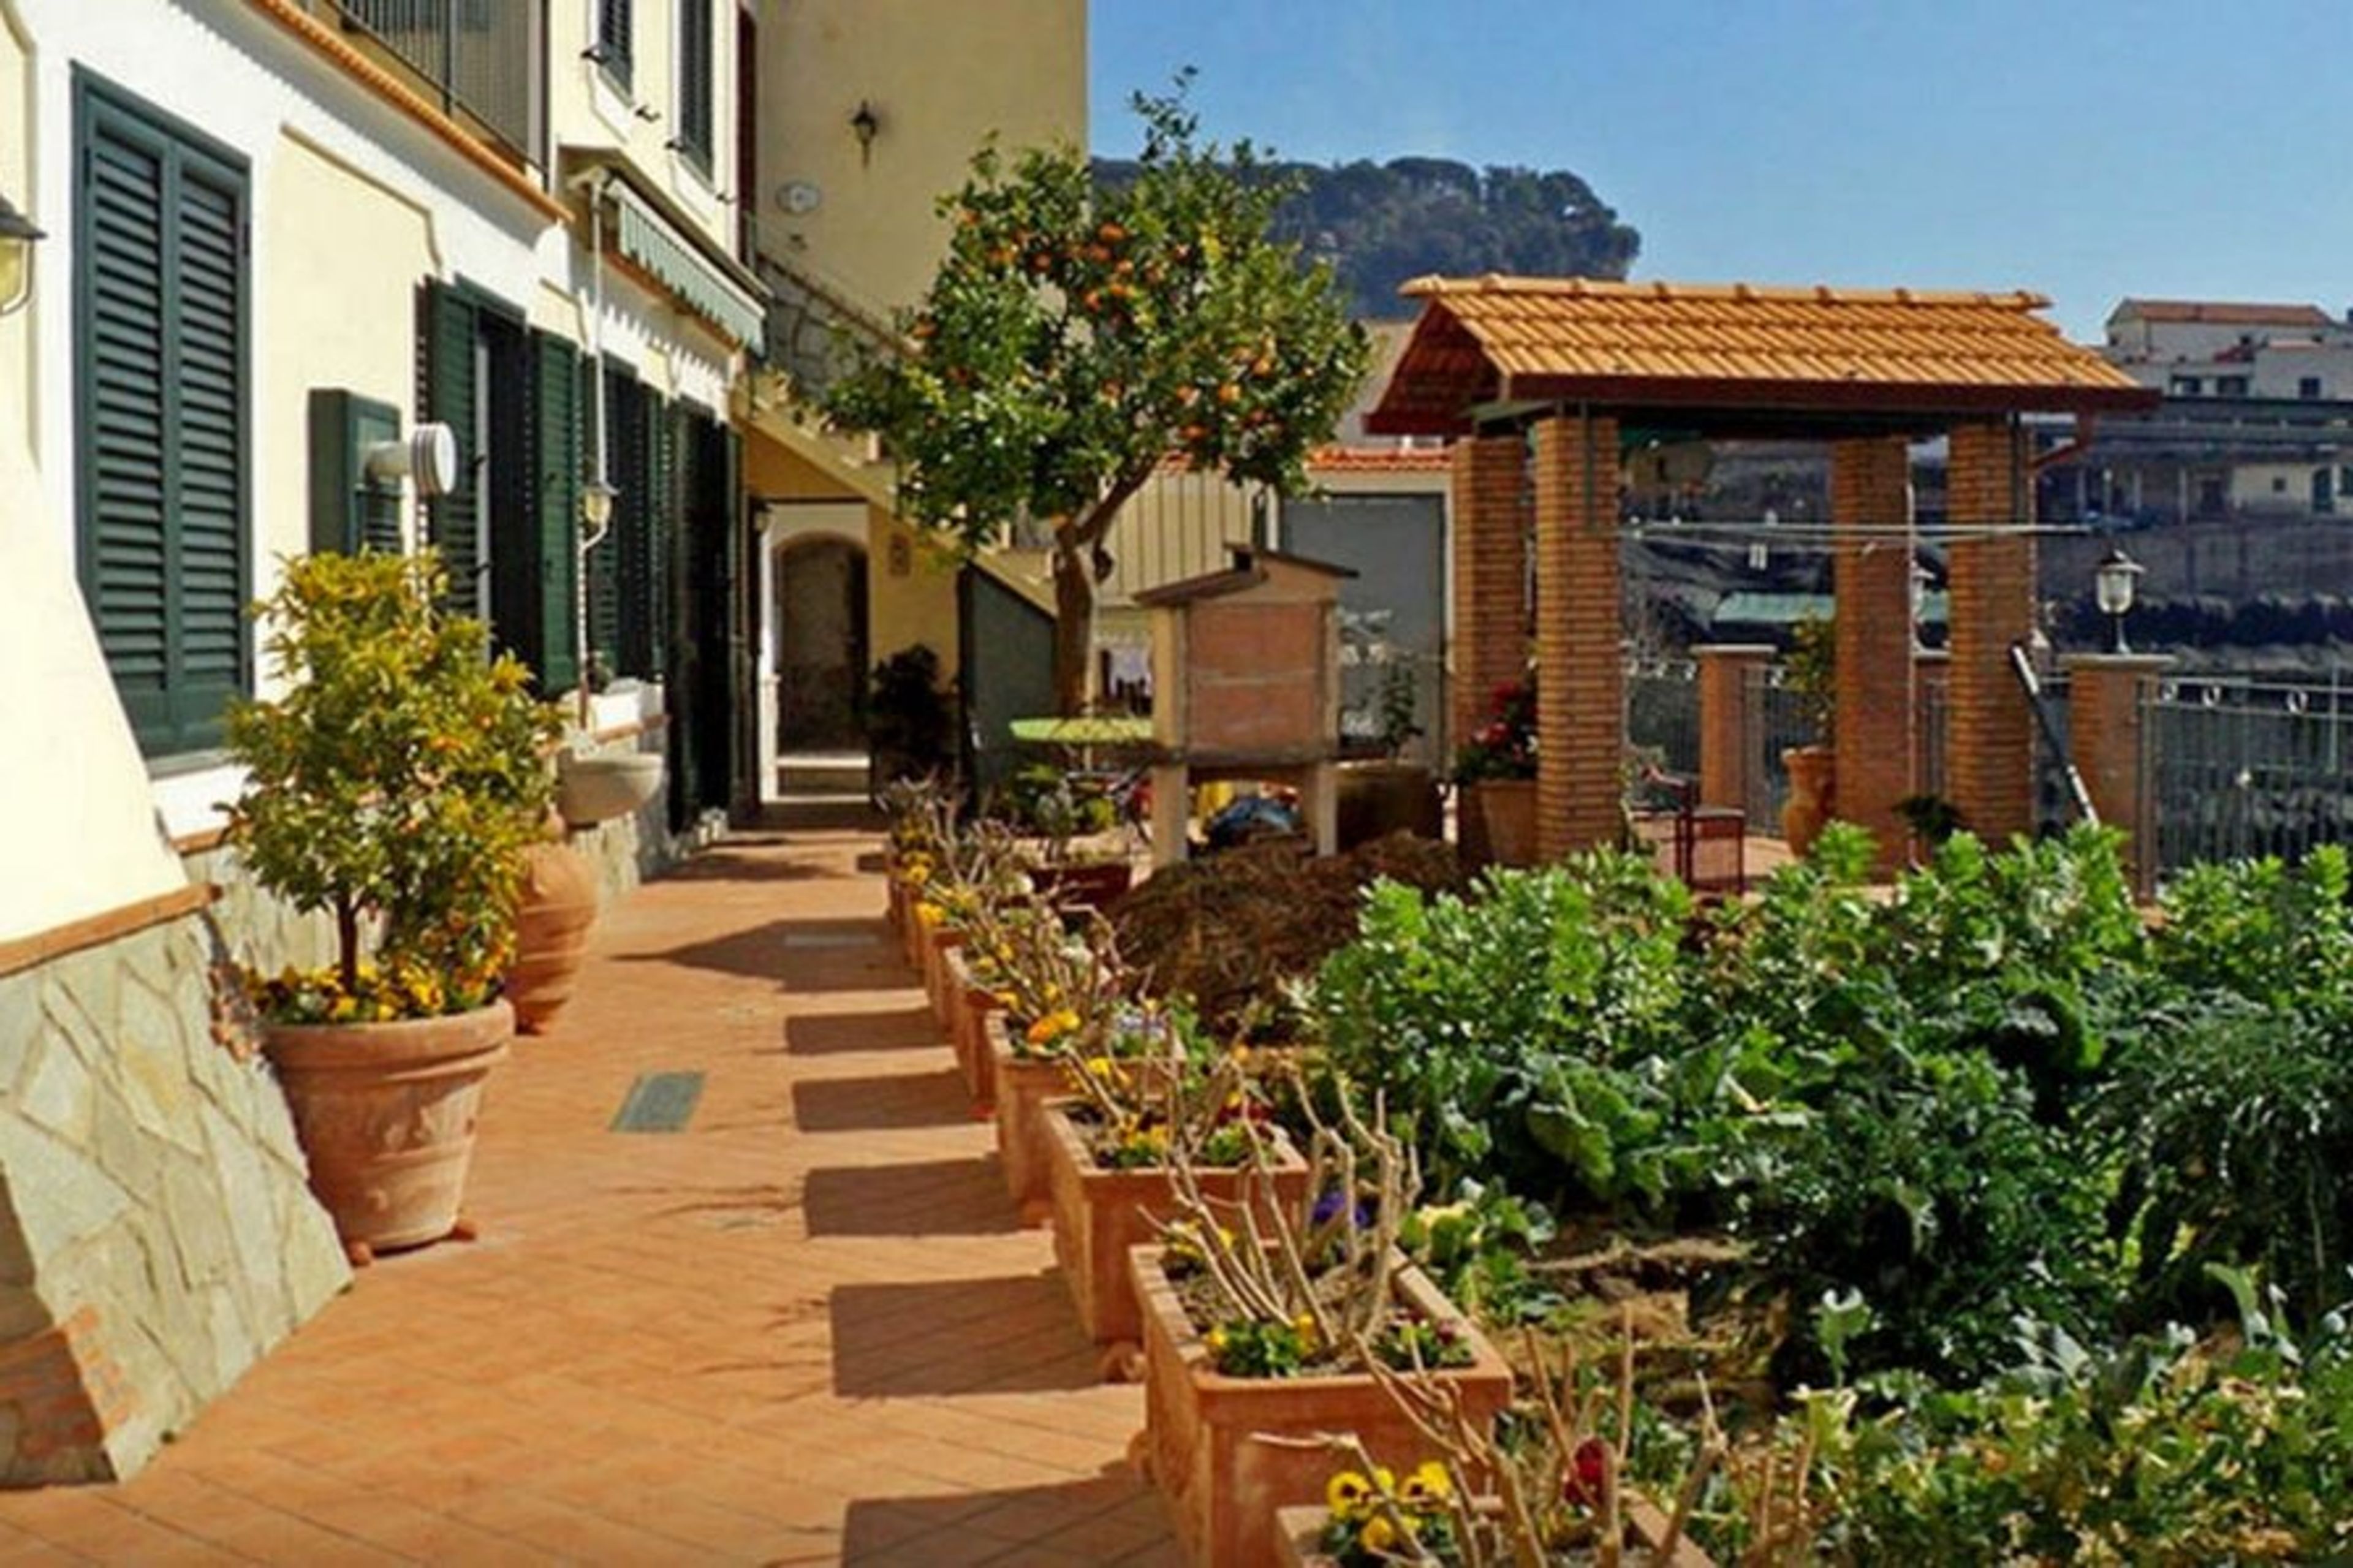 Casa Capri (02) Shared terrace with barbecue area